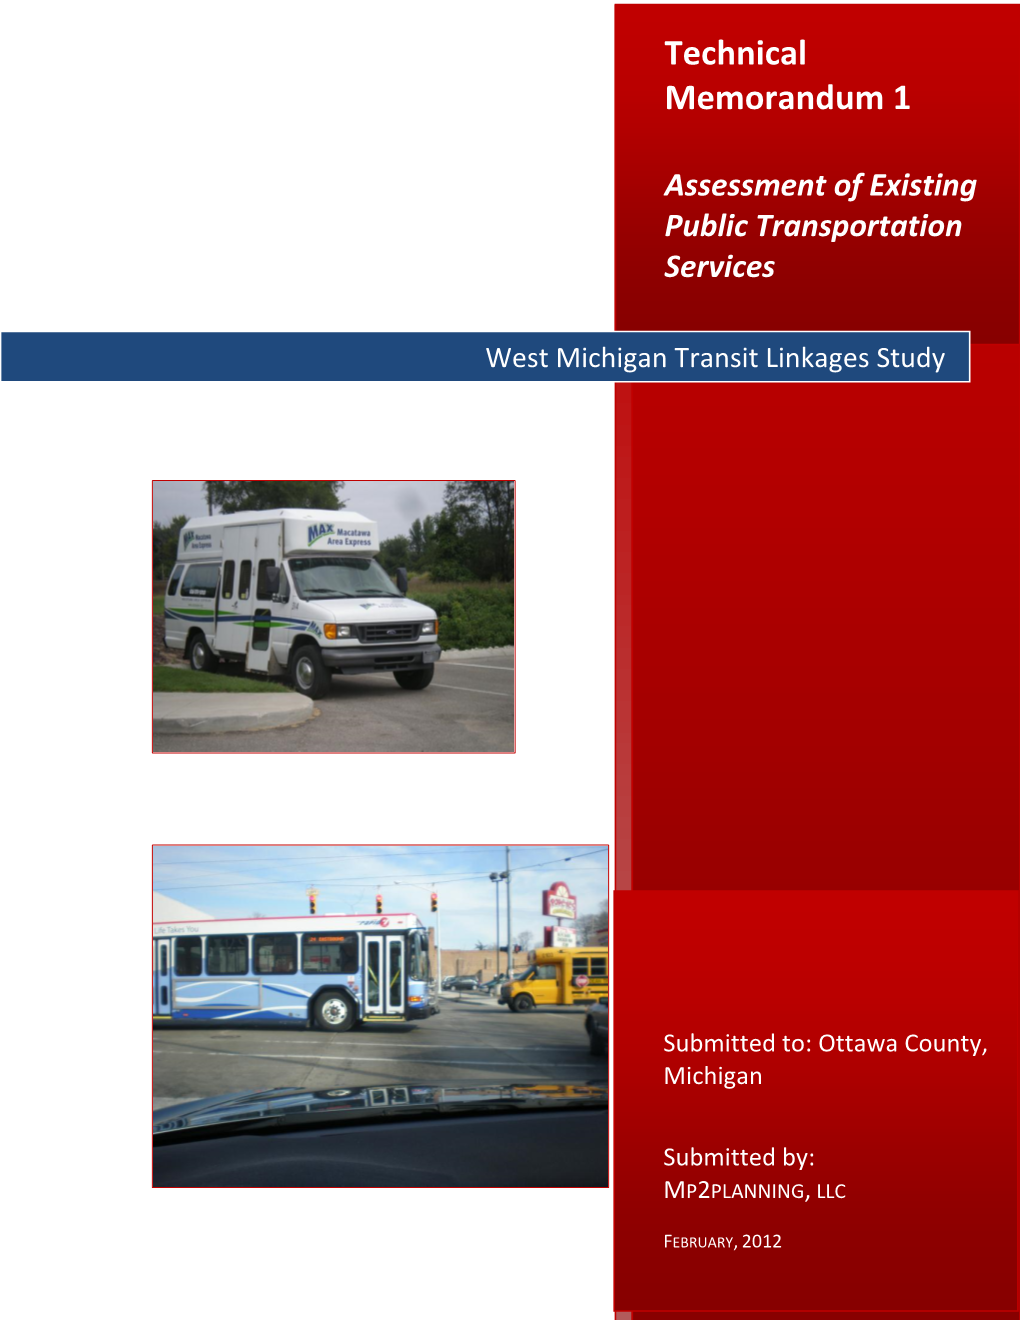 Assessment of Existing Public Transportation Services